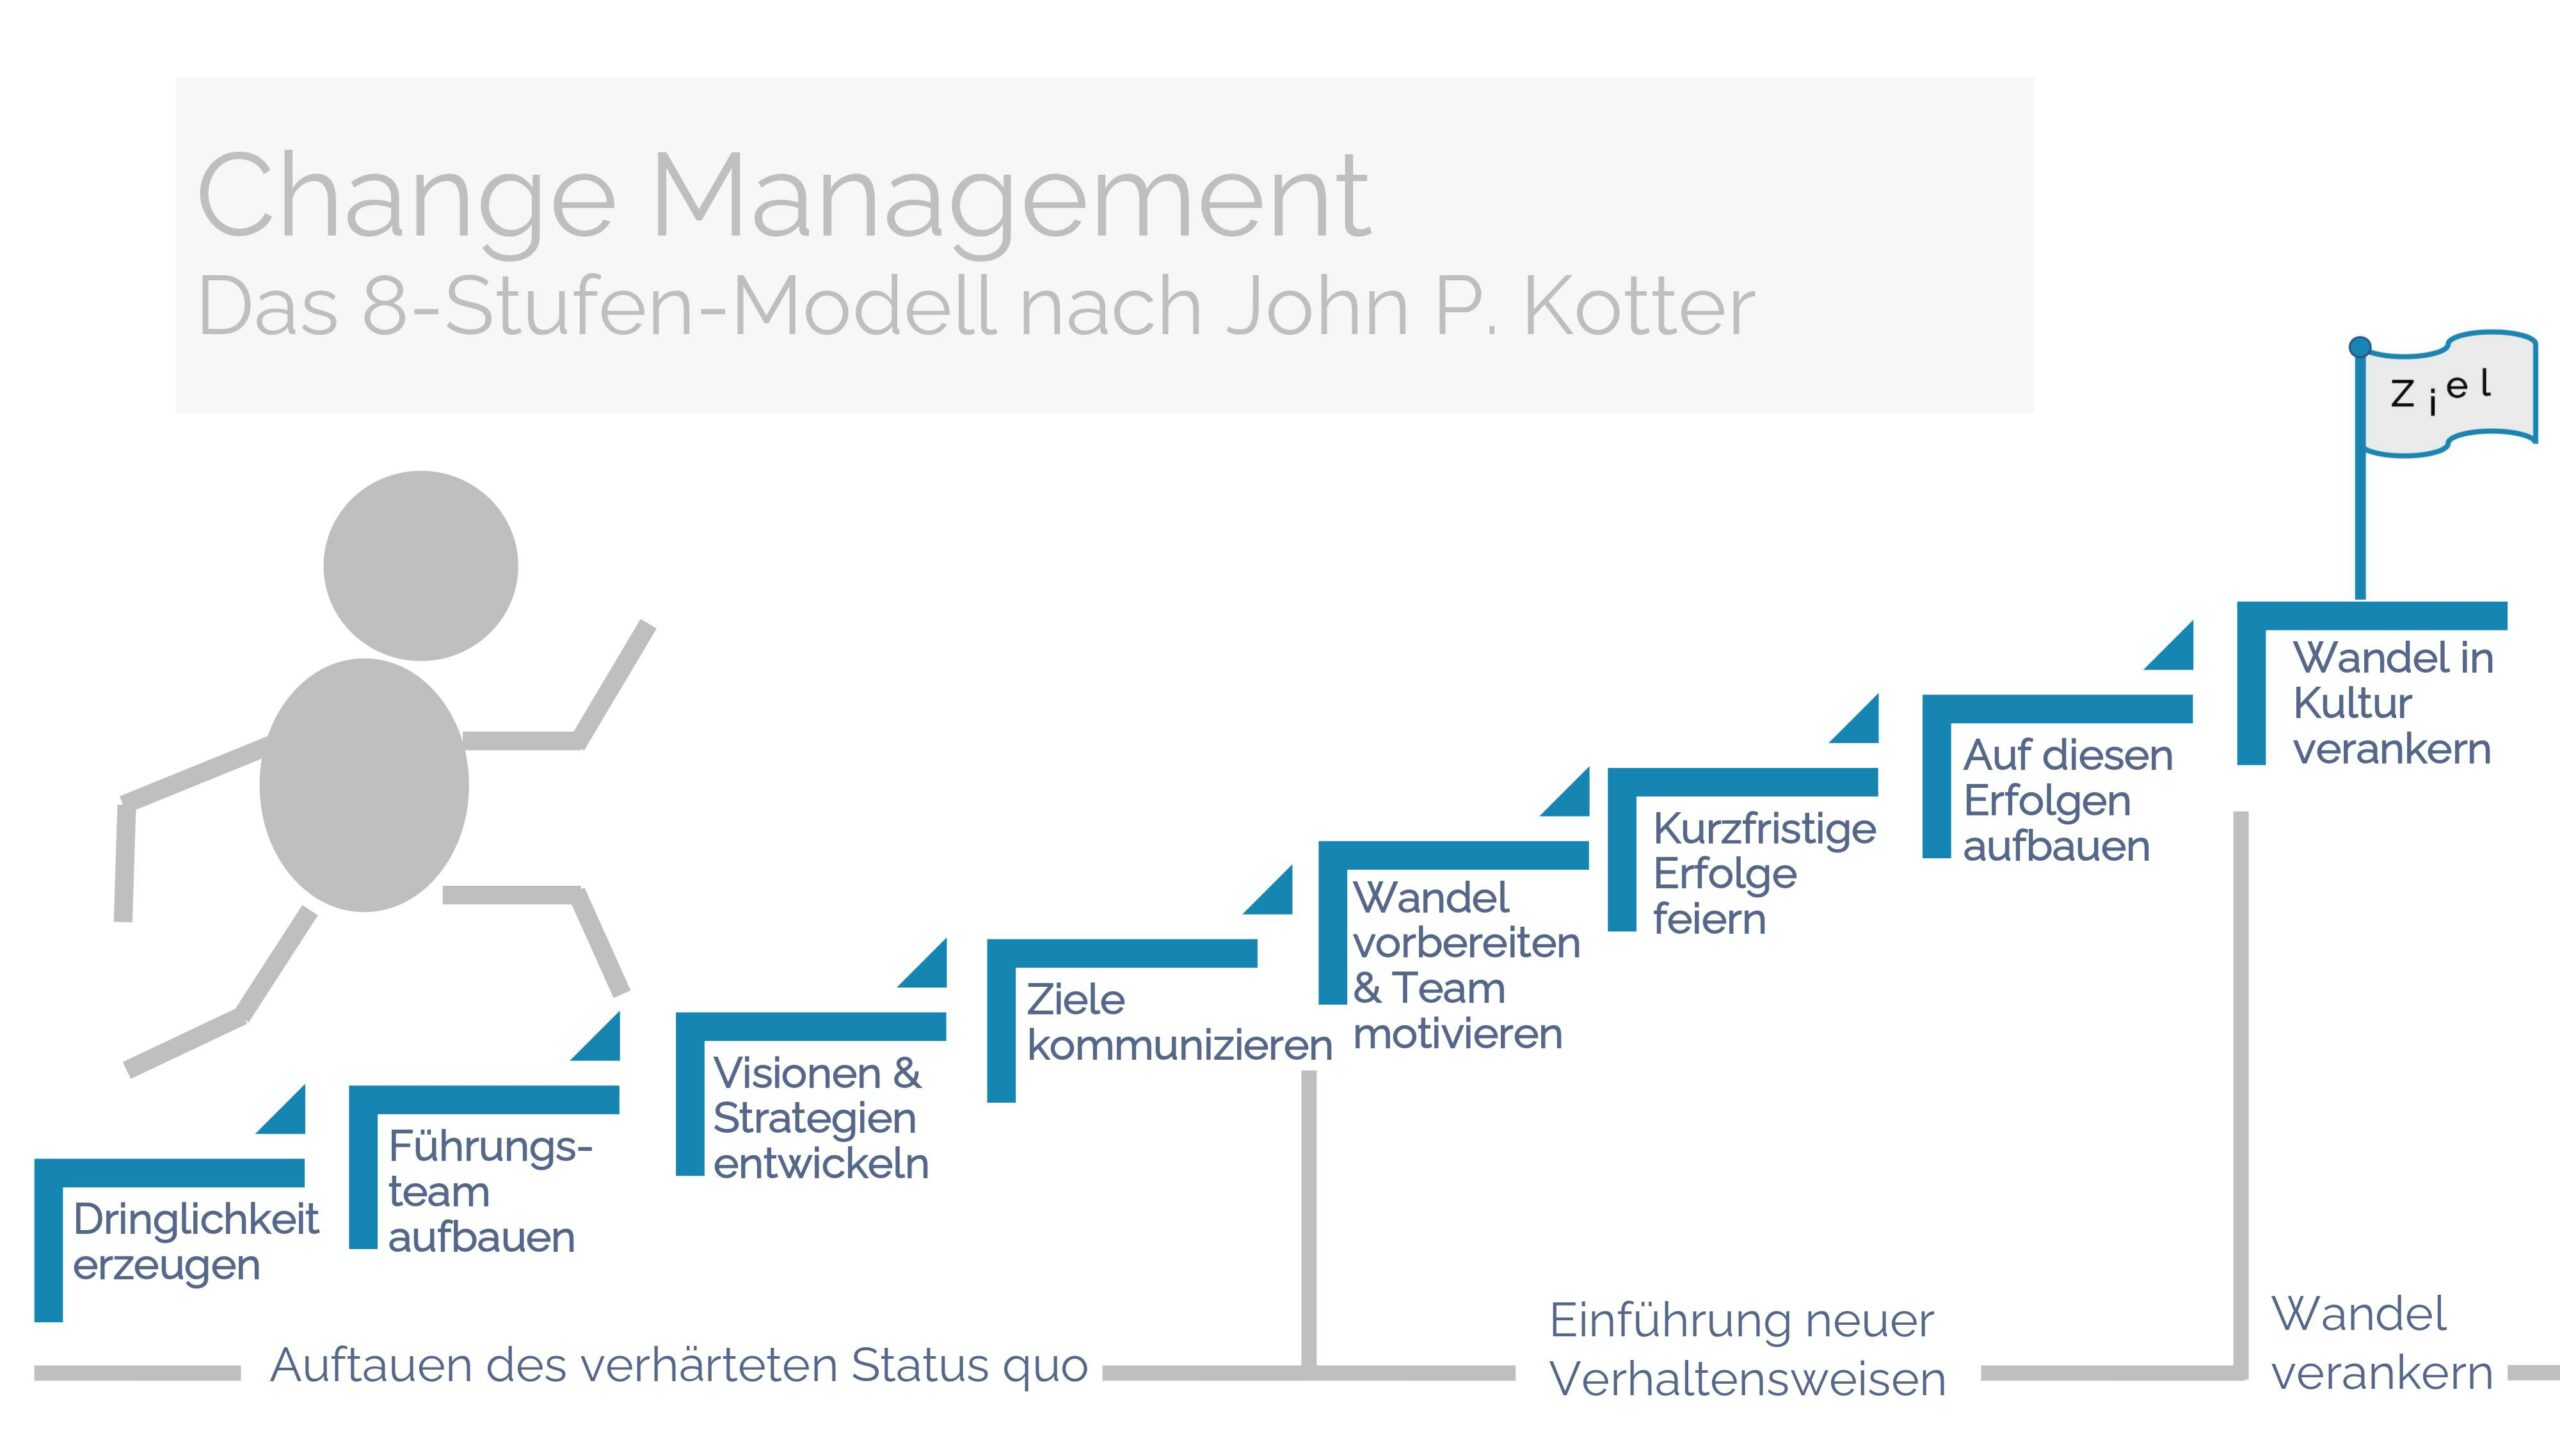 Change Management nach John P. Kotter